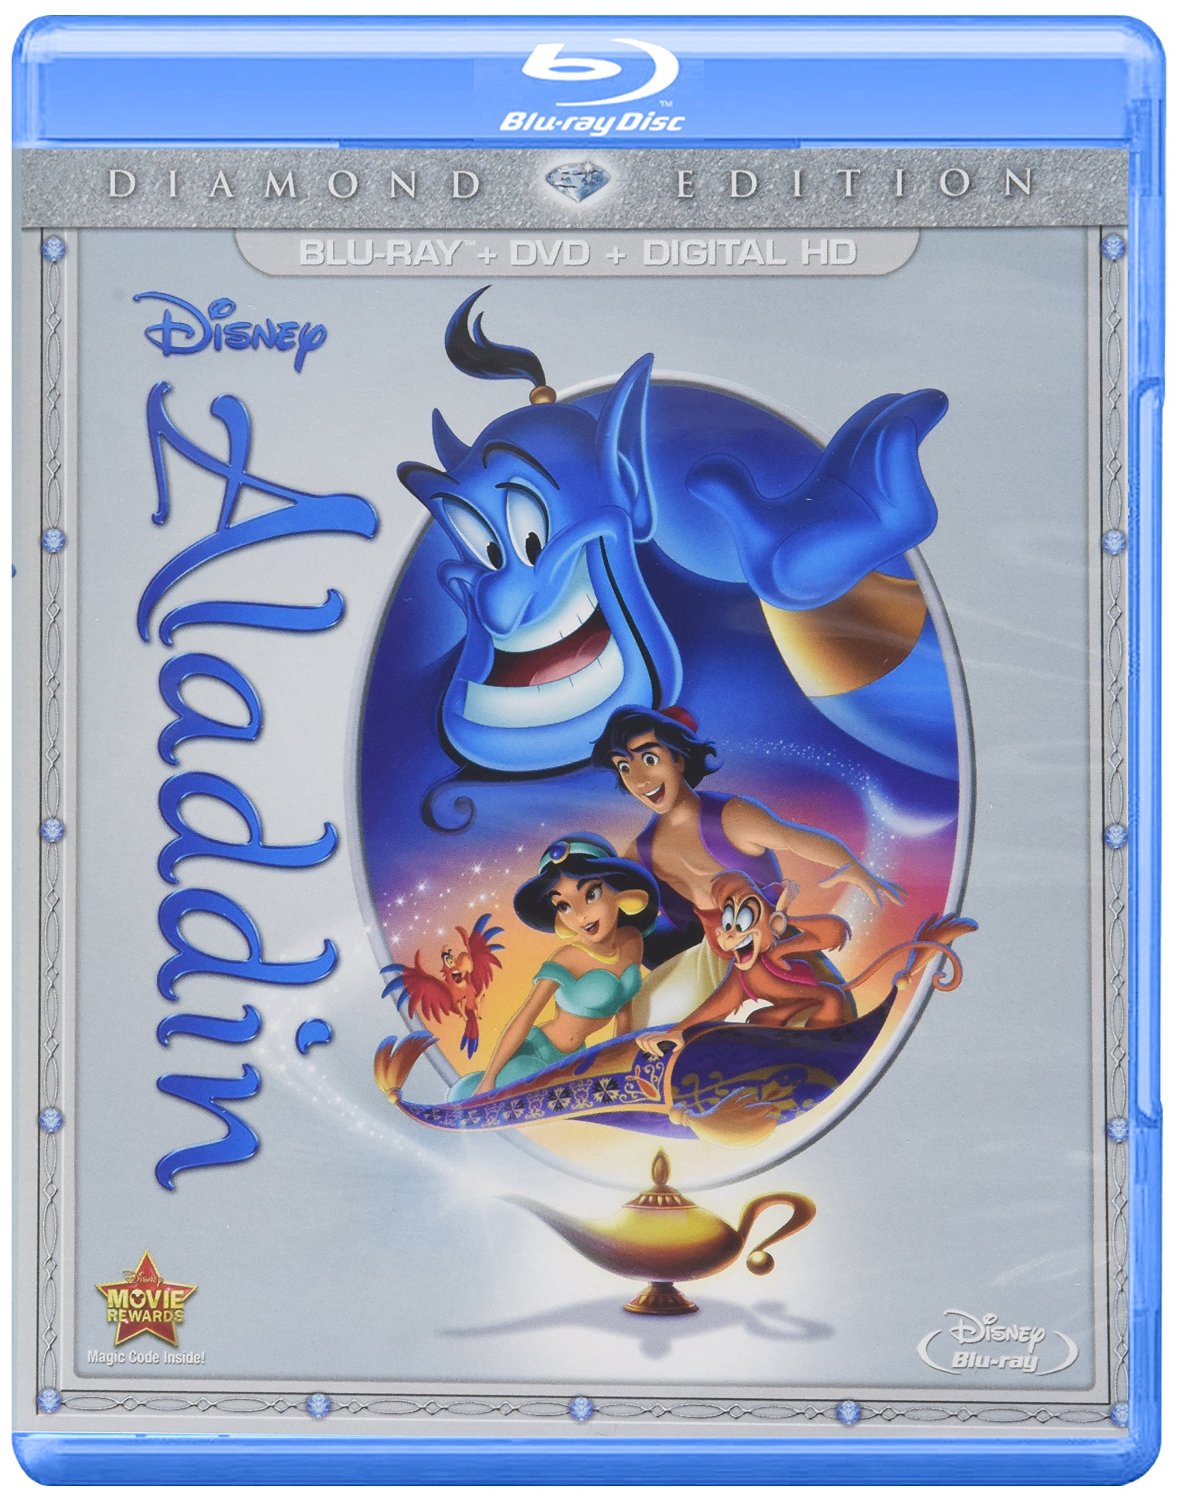 Walt Disney's Aladdin (1992) with the voice talents of Robin Williams, Gilbert Gottfried